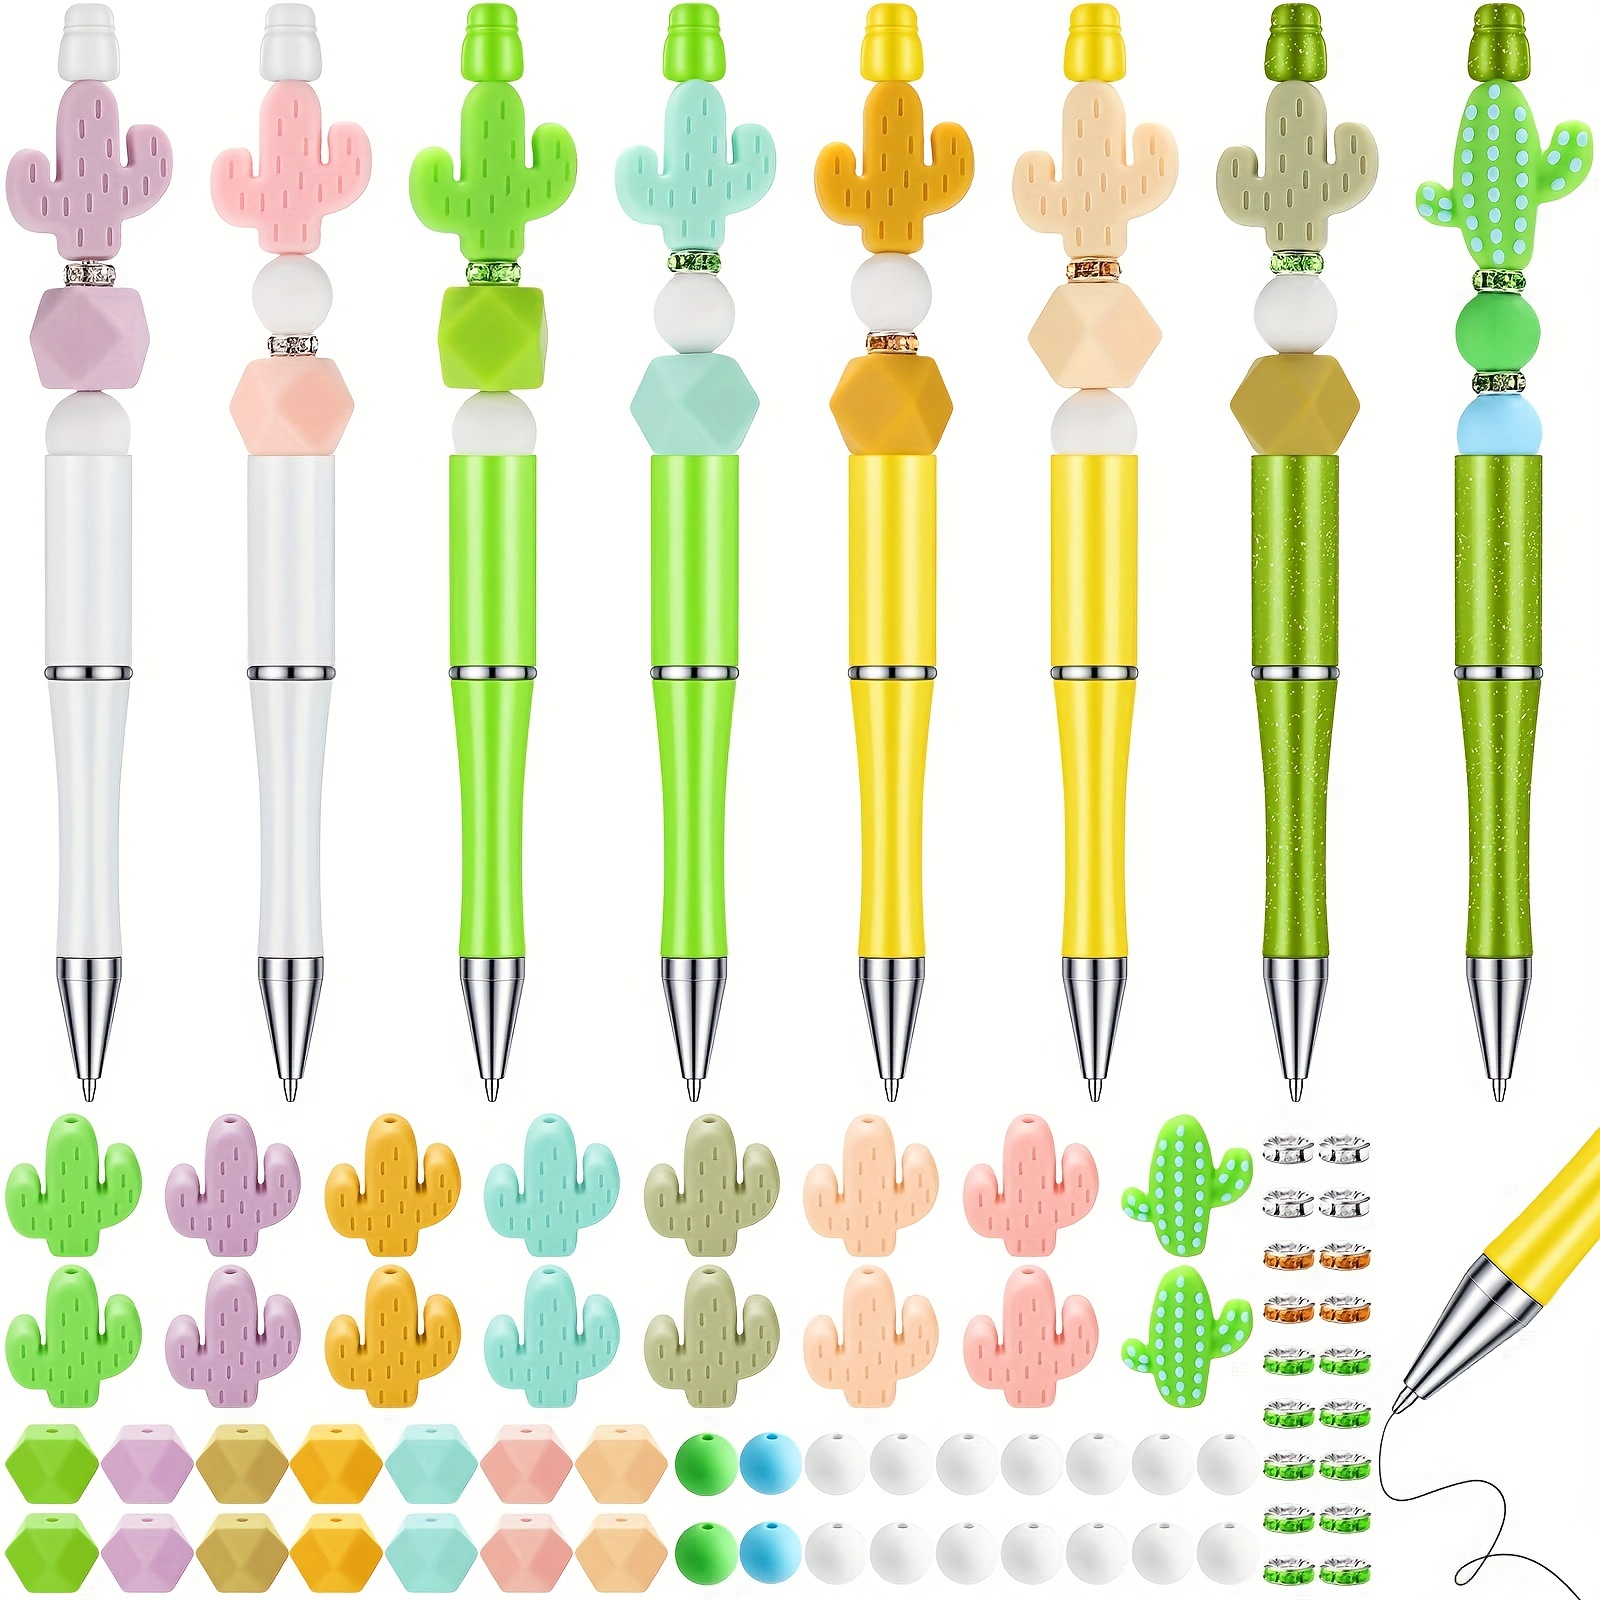 Beaded Pens - Pens - Craft Supplies